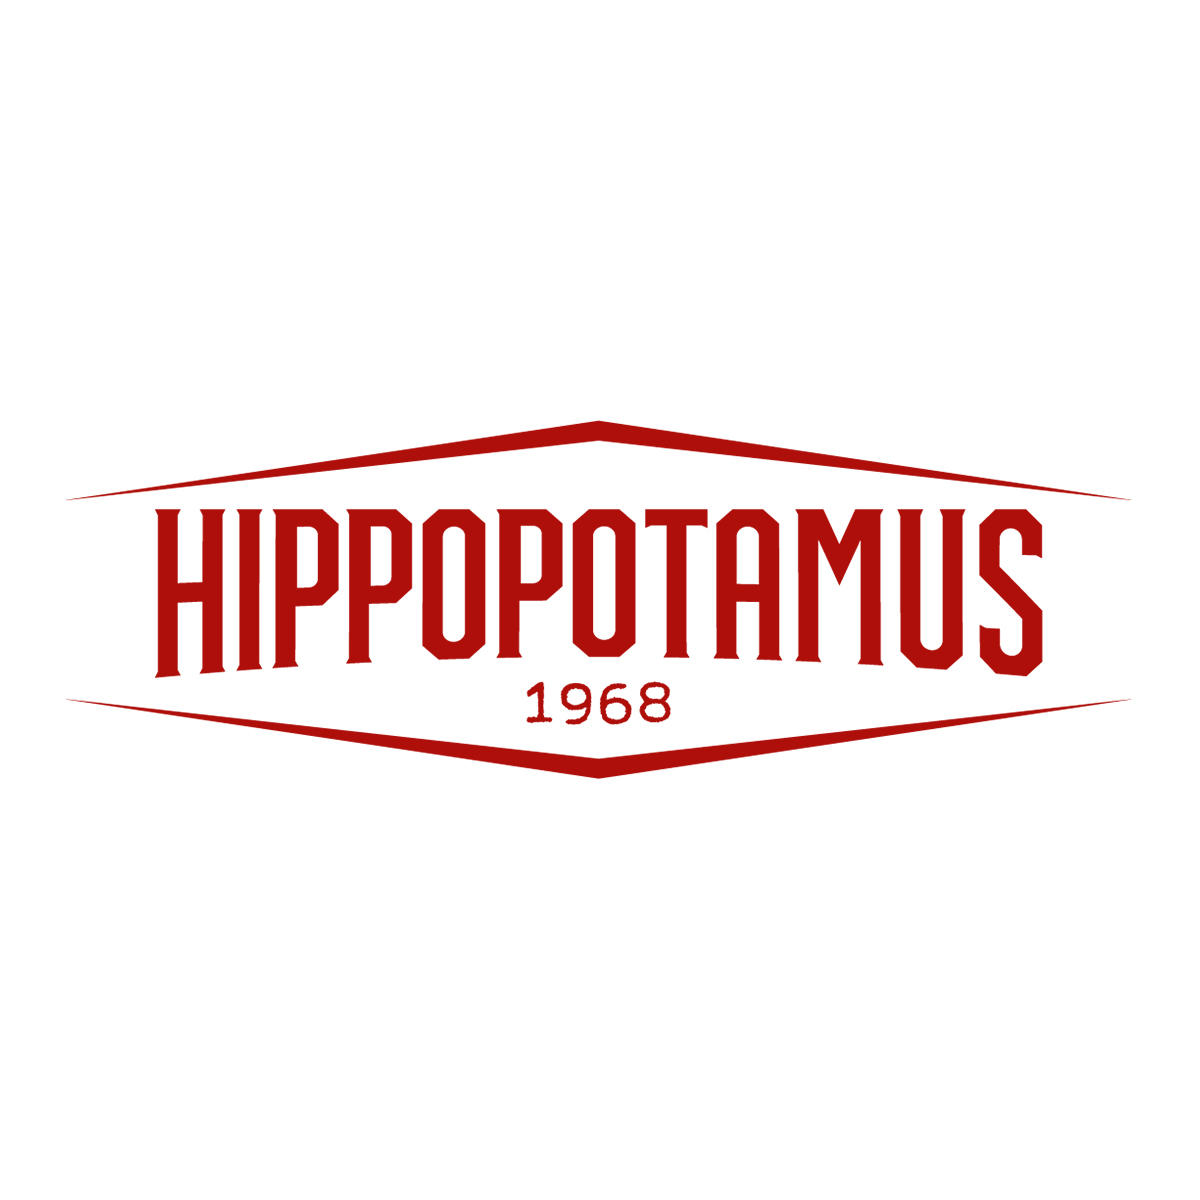 Hippopotamus Steakhouse - Restaurant - Saint-Martin-des-Champs - 02 52 01 00 05 France | ShowMeLocal.com